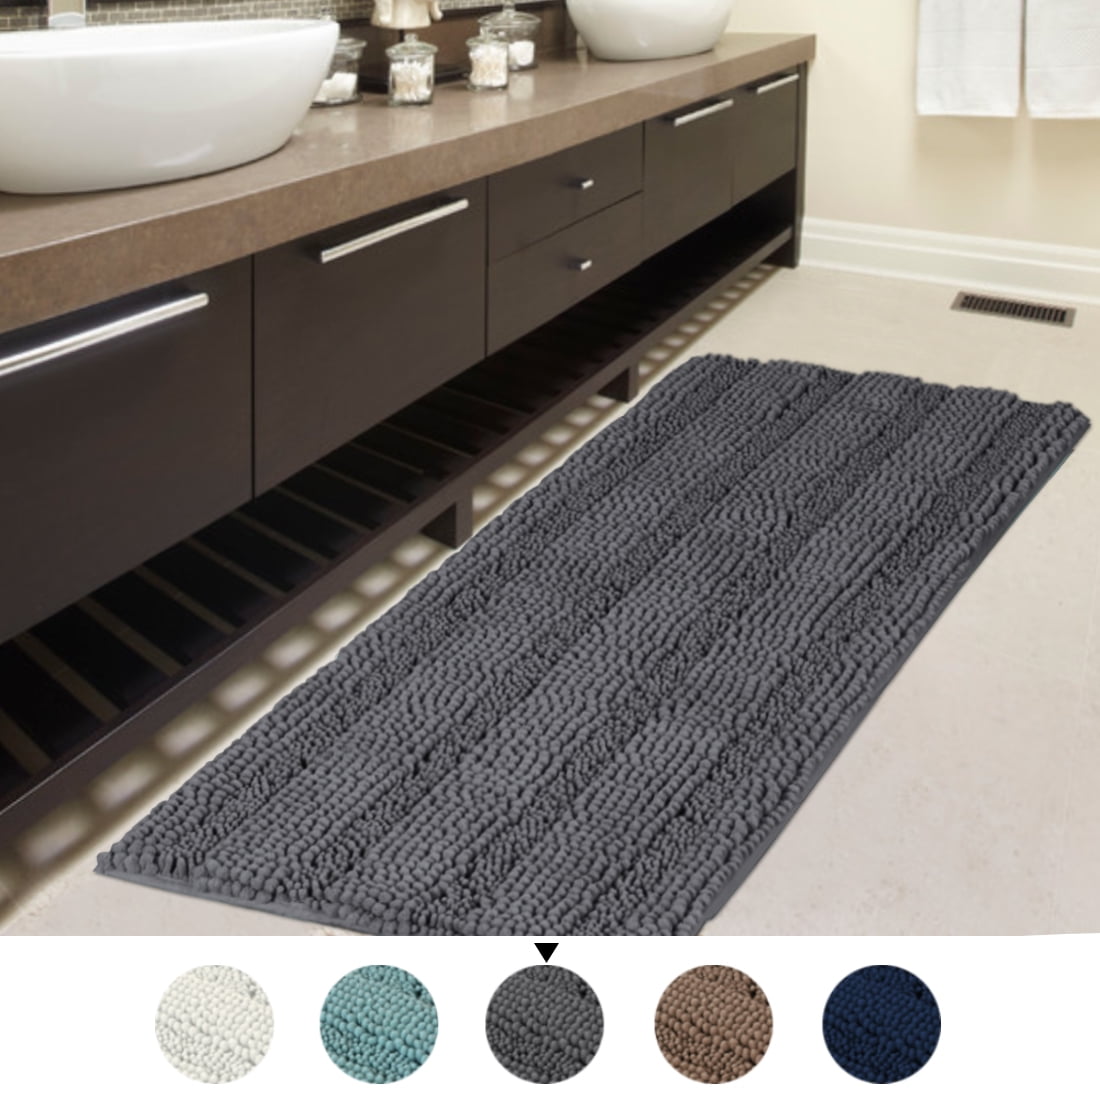 Water Design Bath Mat Set Pedestal Blanket 3 Pcs Soft Durable Floor Carpet Rug 